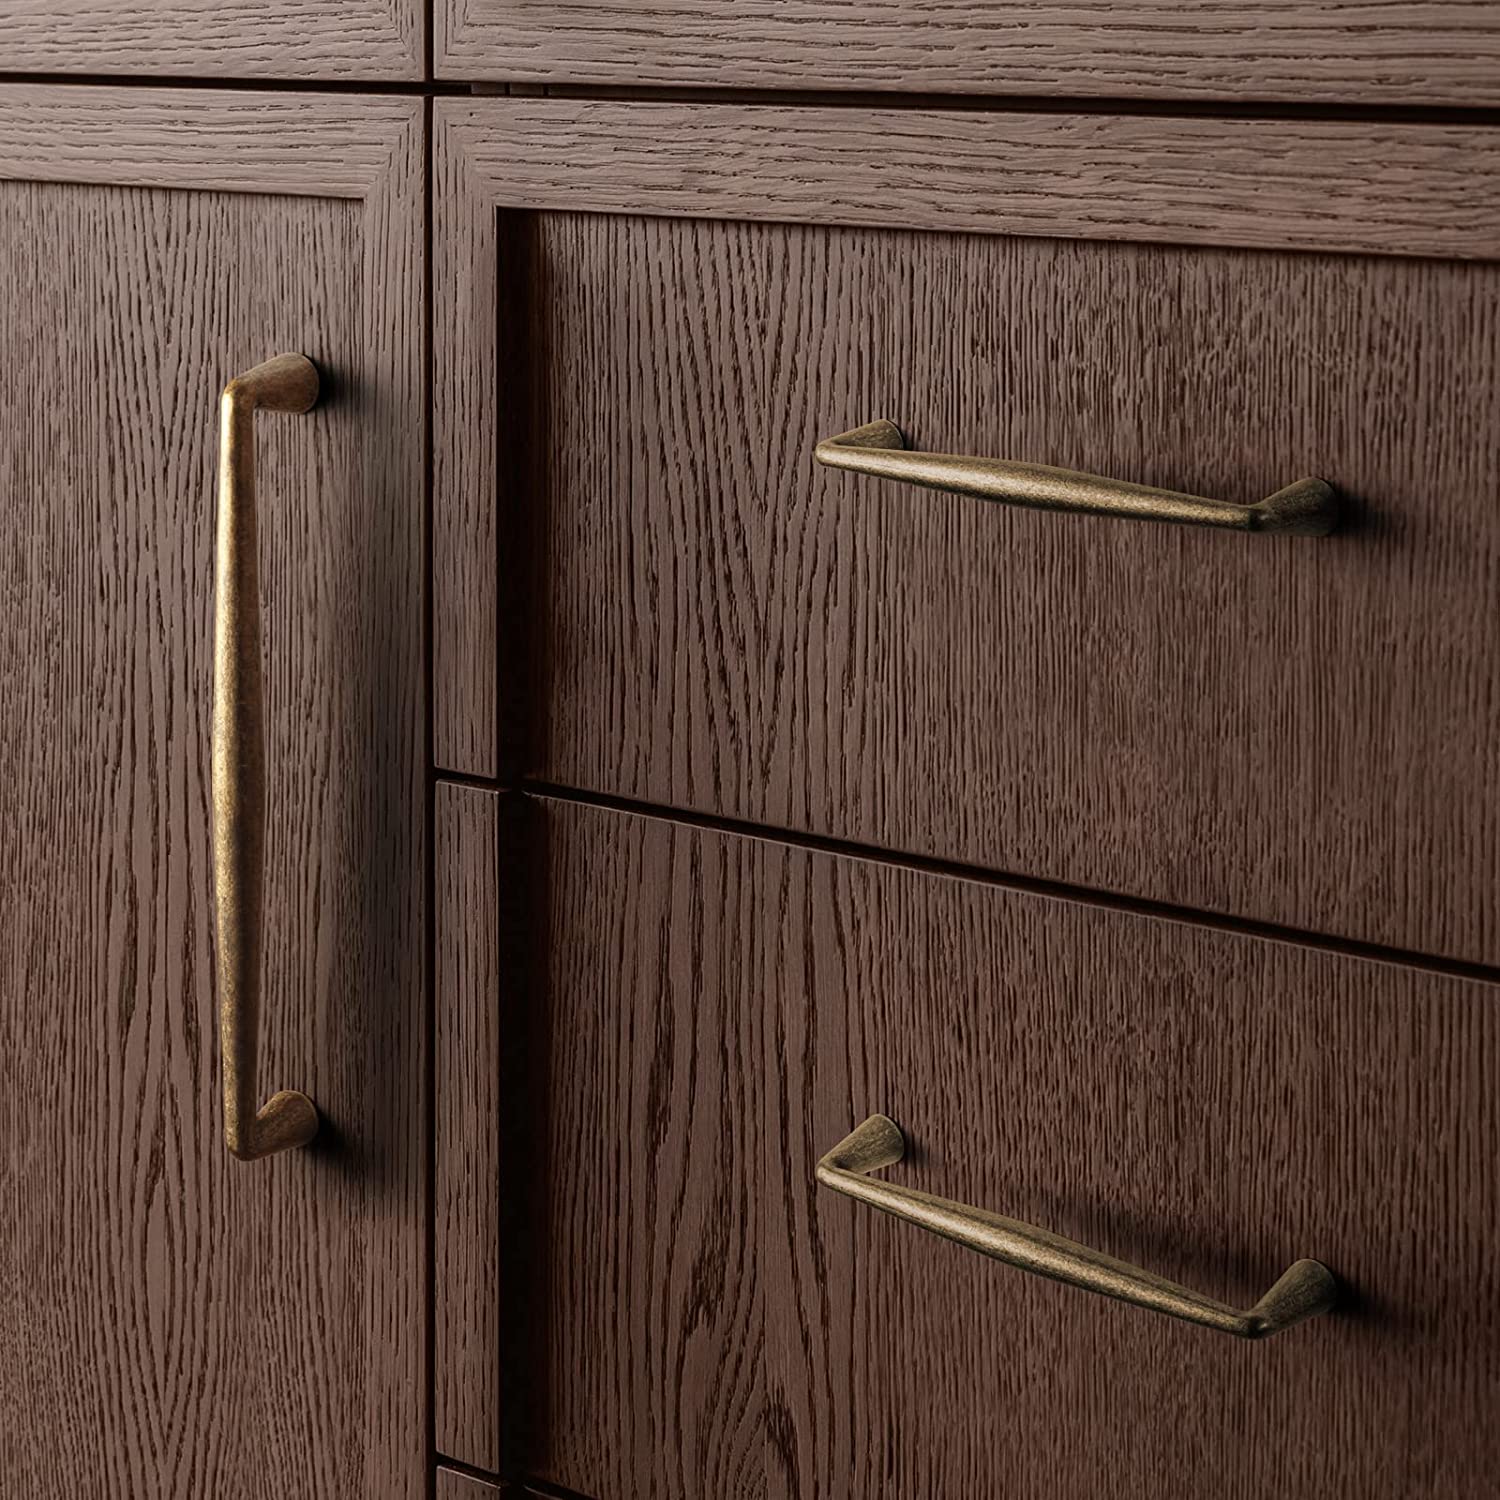 Goo-Ki Retro Durable Cabinet Pulls Luxurious Drawer Pulls for Bedroom Kitchen 6 Pack